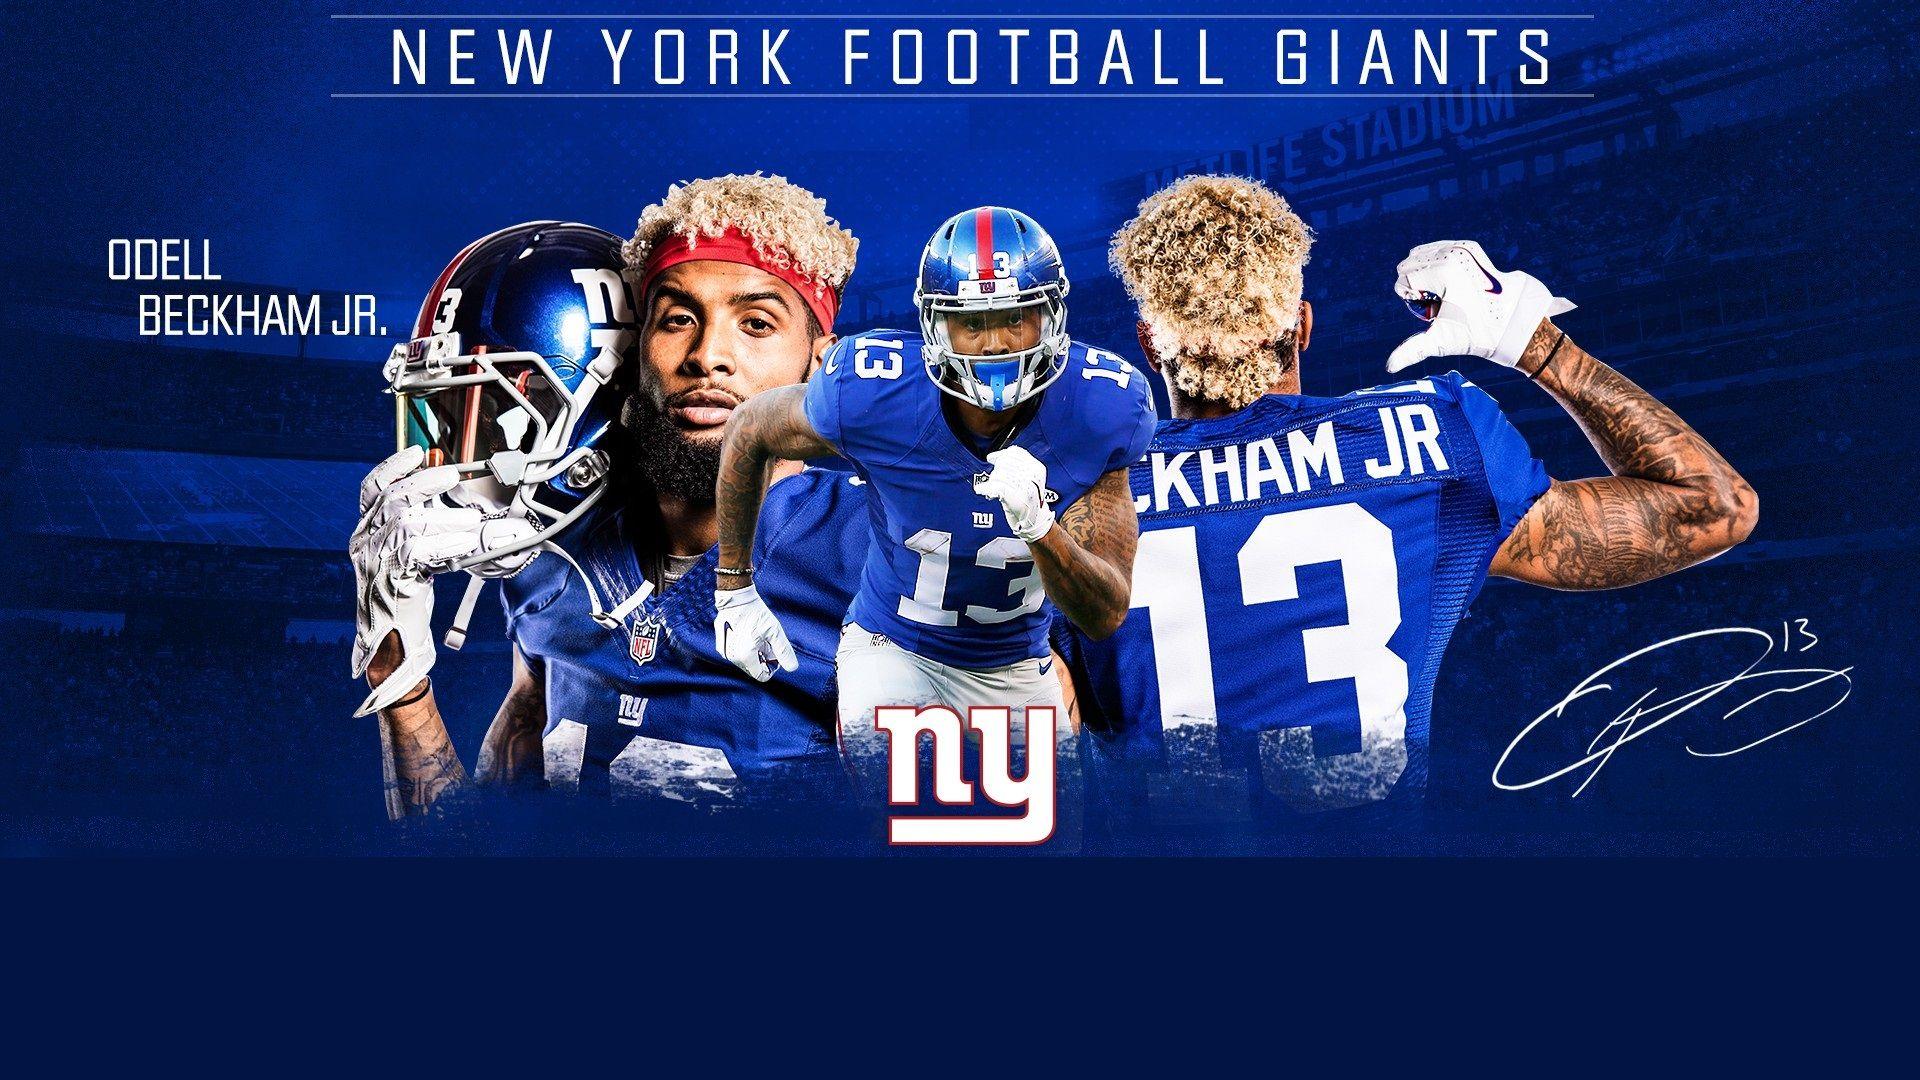 HD Desktop Wallpaper New York Giants. Nfl football wallpaper